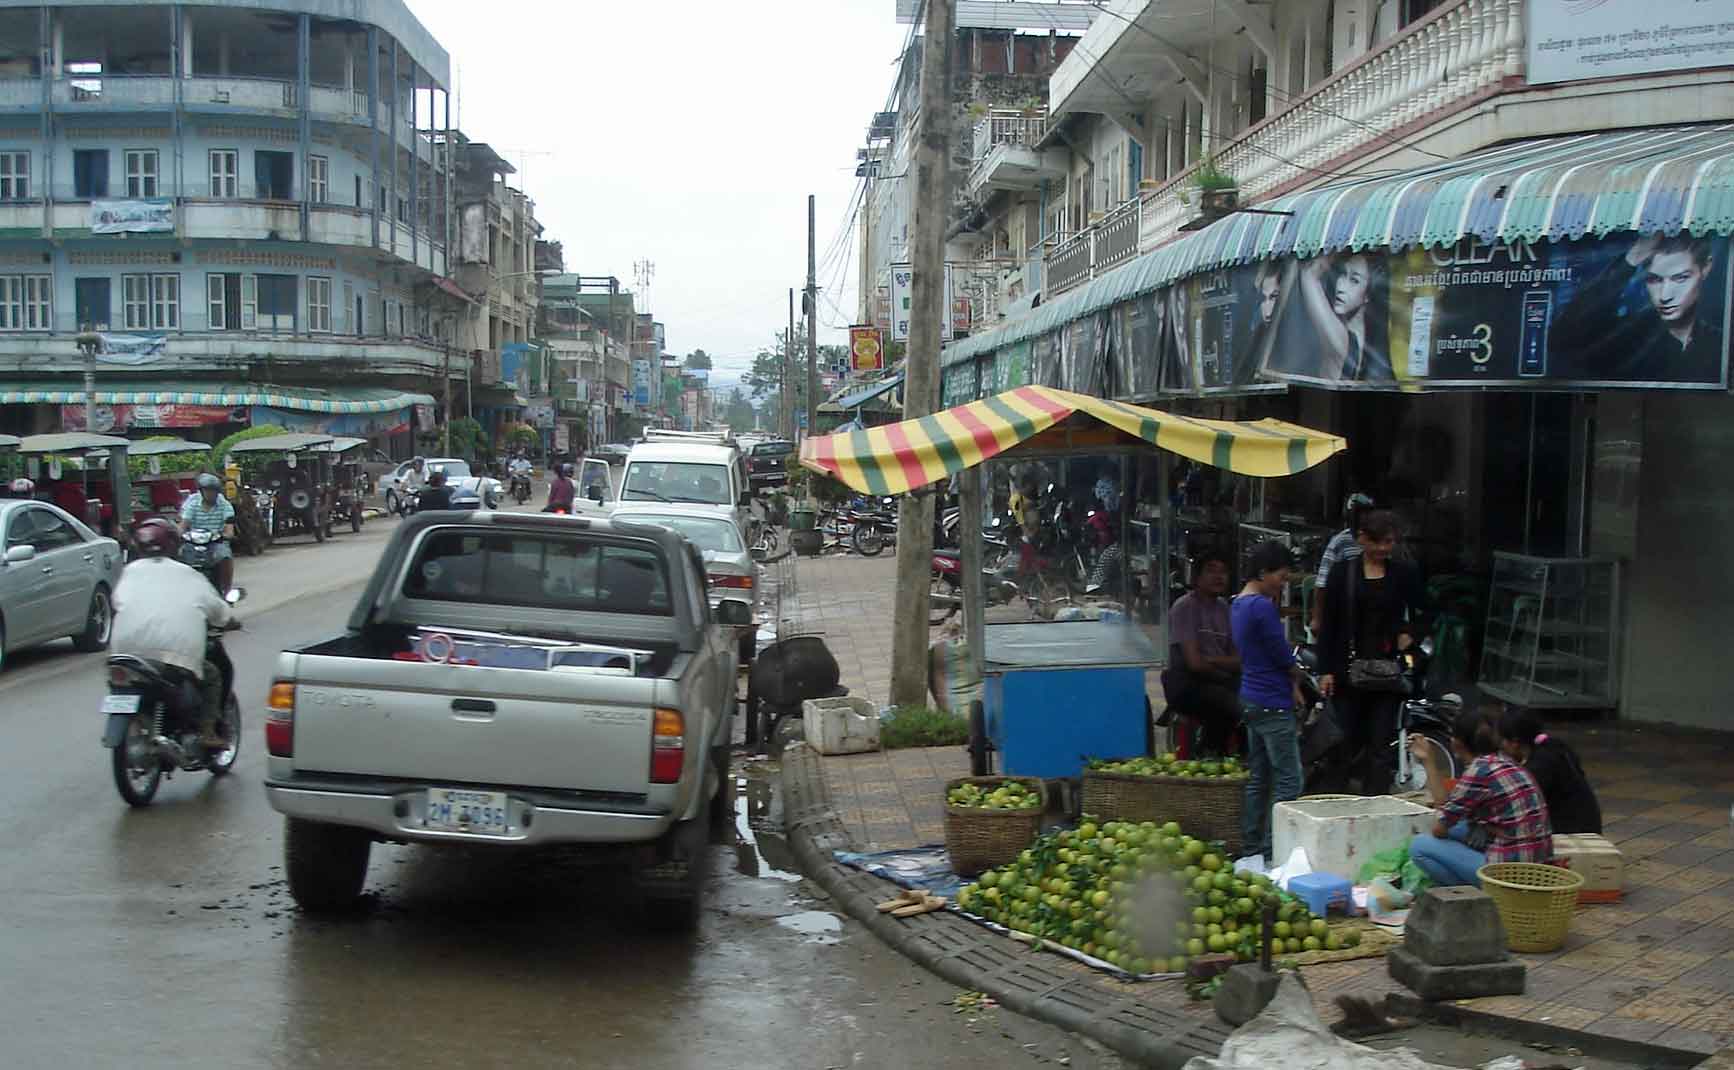 MainStreetCity - the province of Battambanb